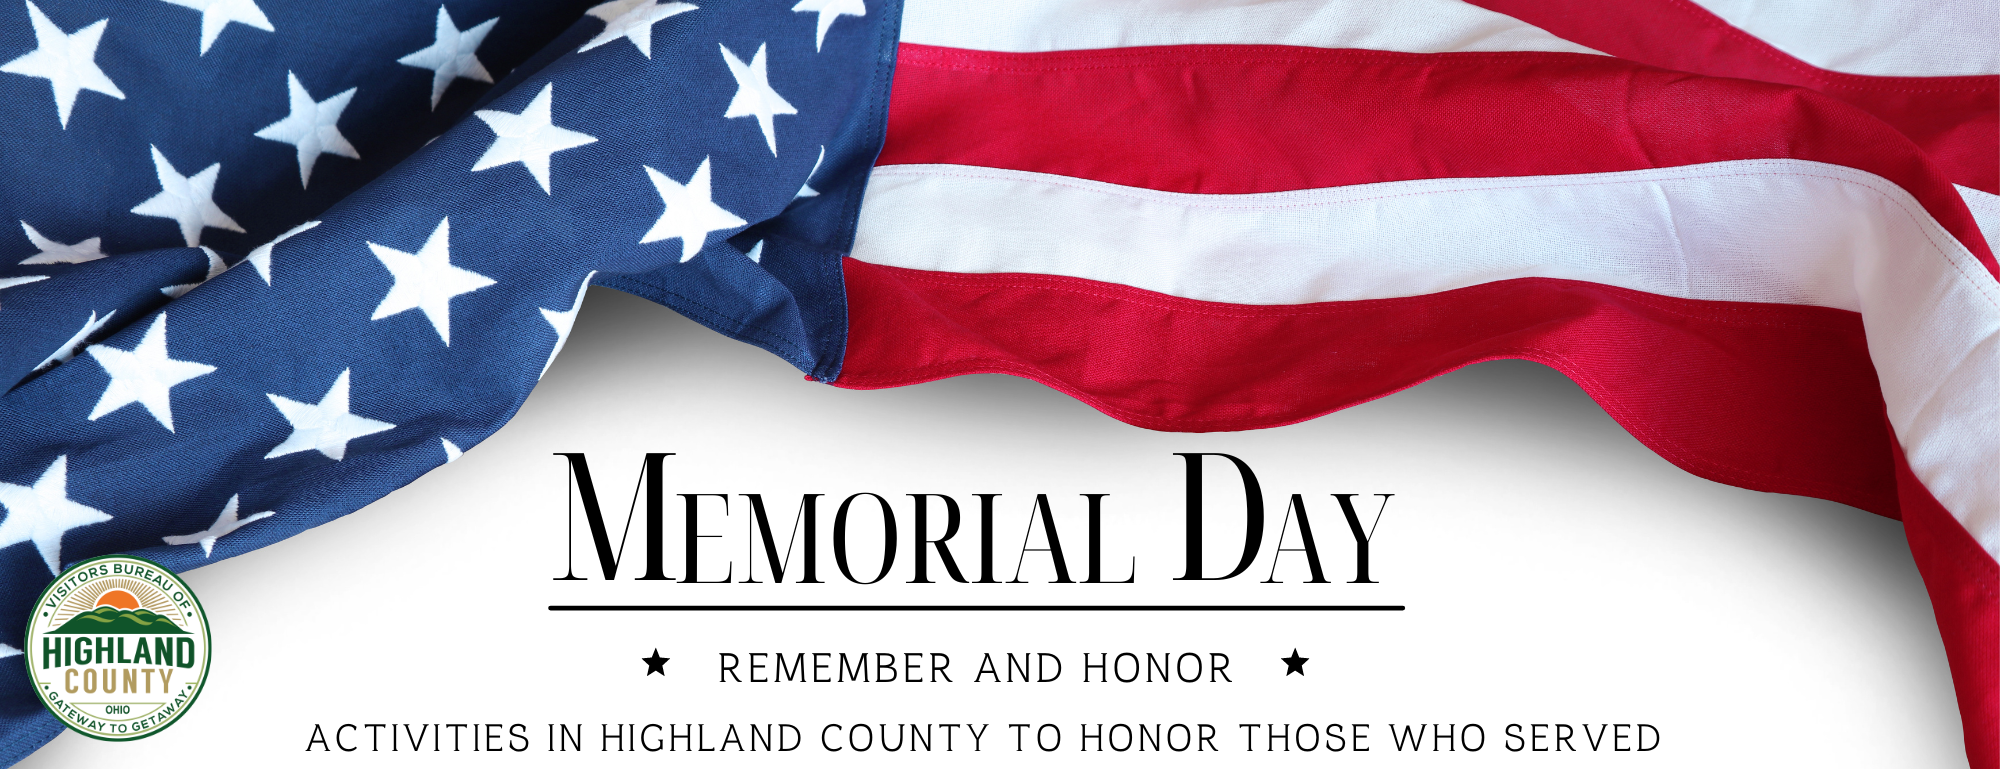 Memorial Day Activities in Highland County